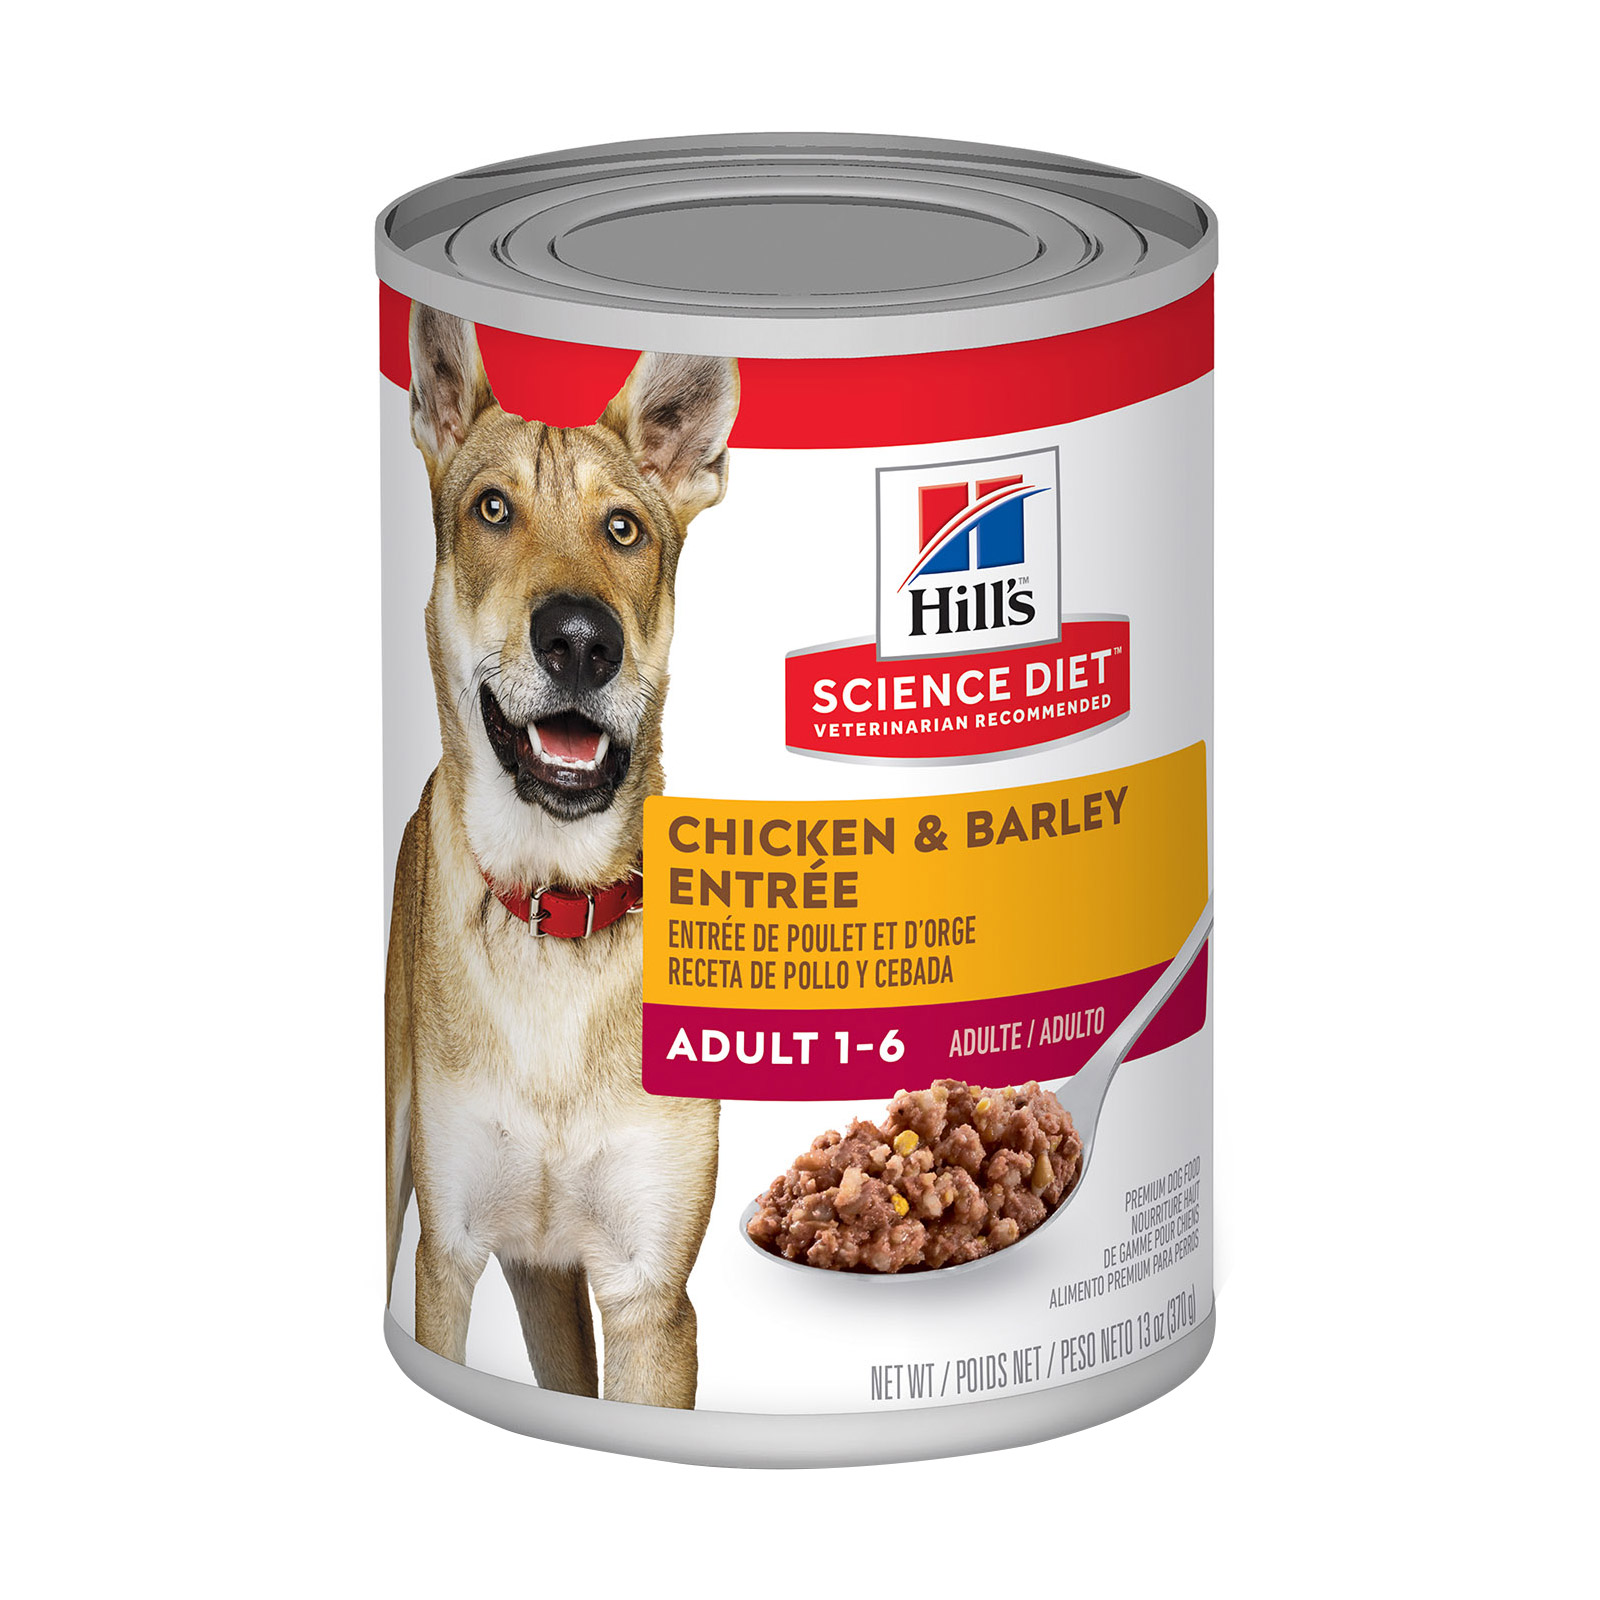 Hill's Science Diet Adult Chicken & Barley Entrée Canned Dog Food